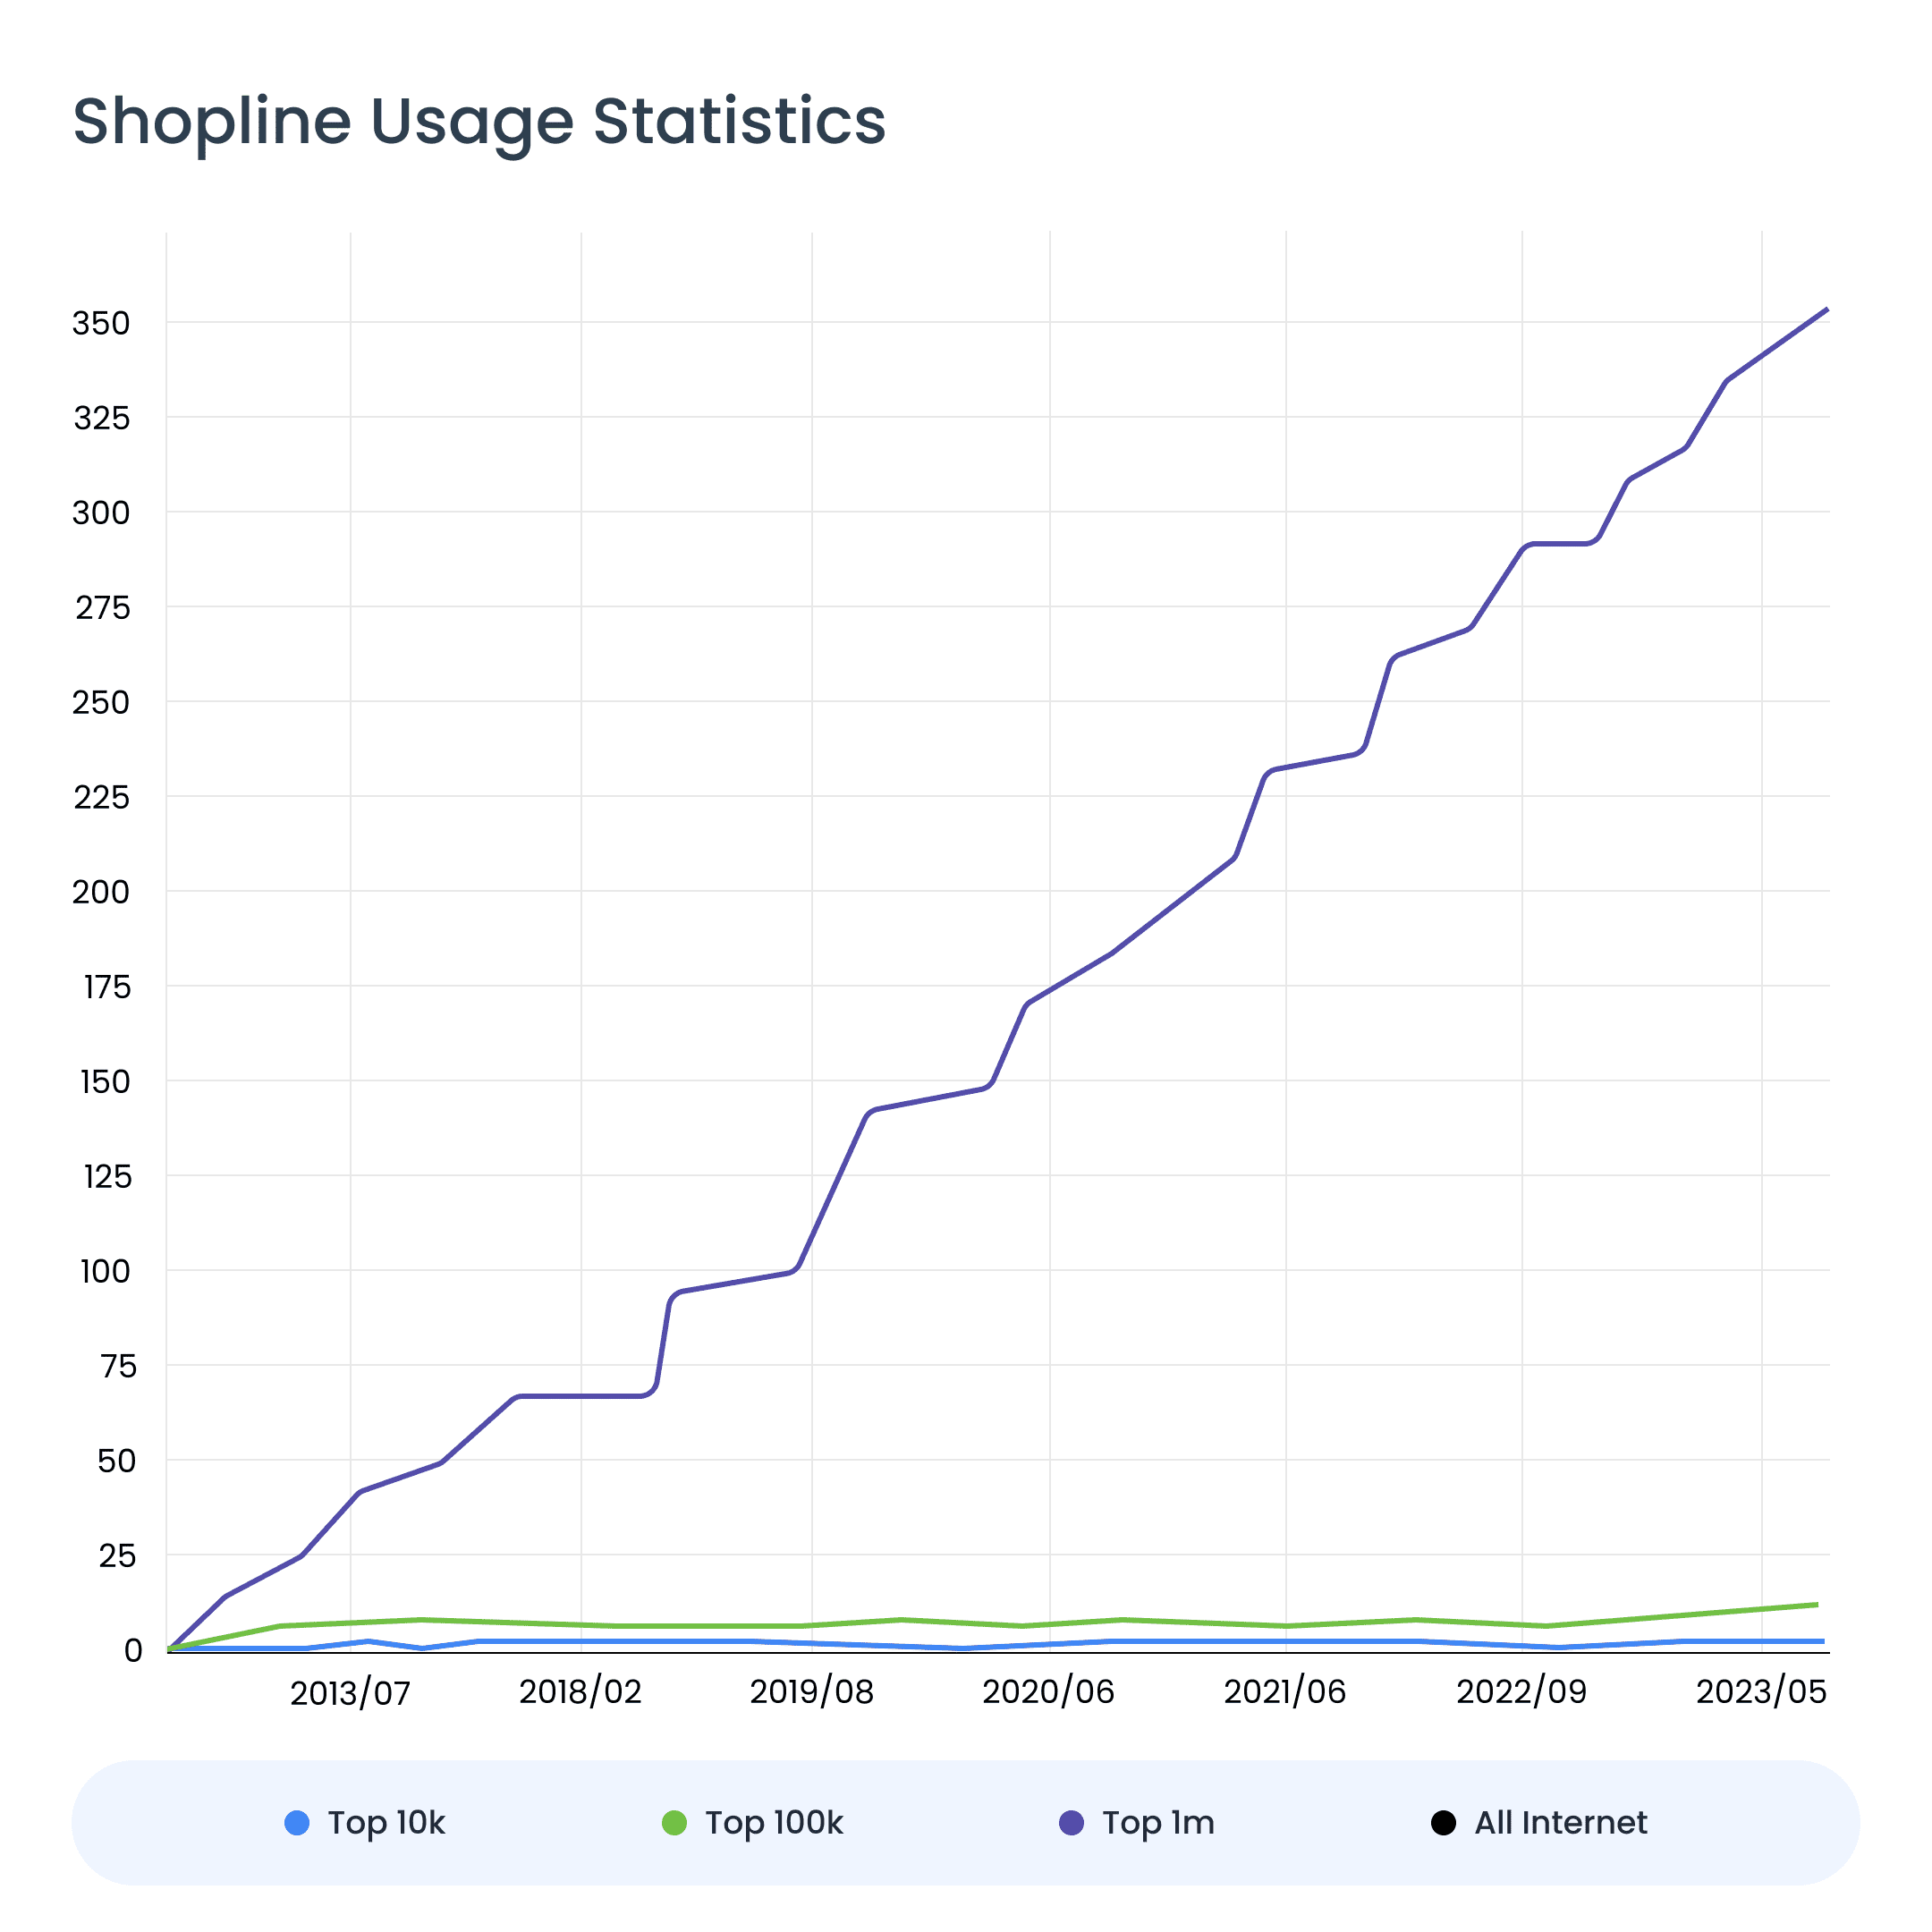 Shopline usages statistics